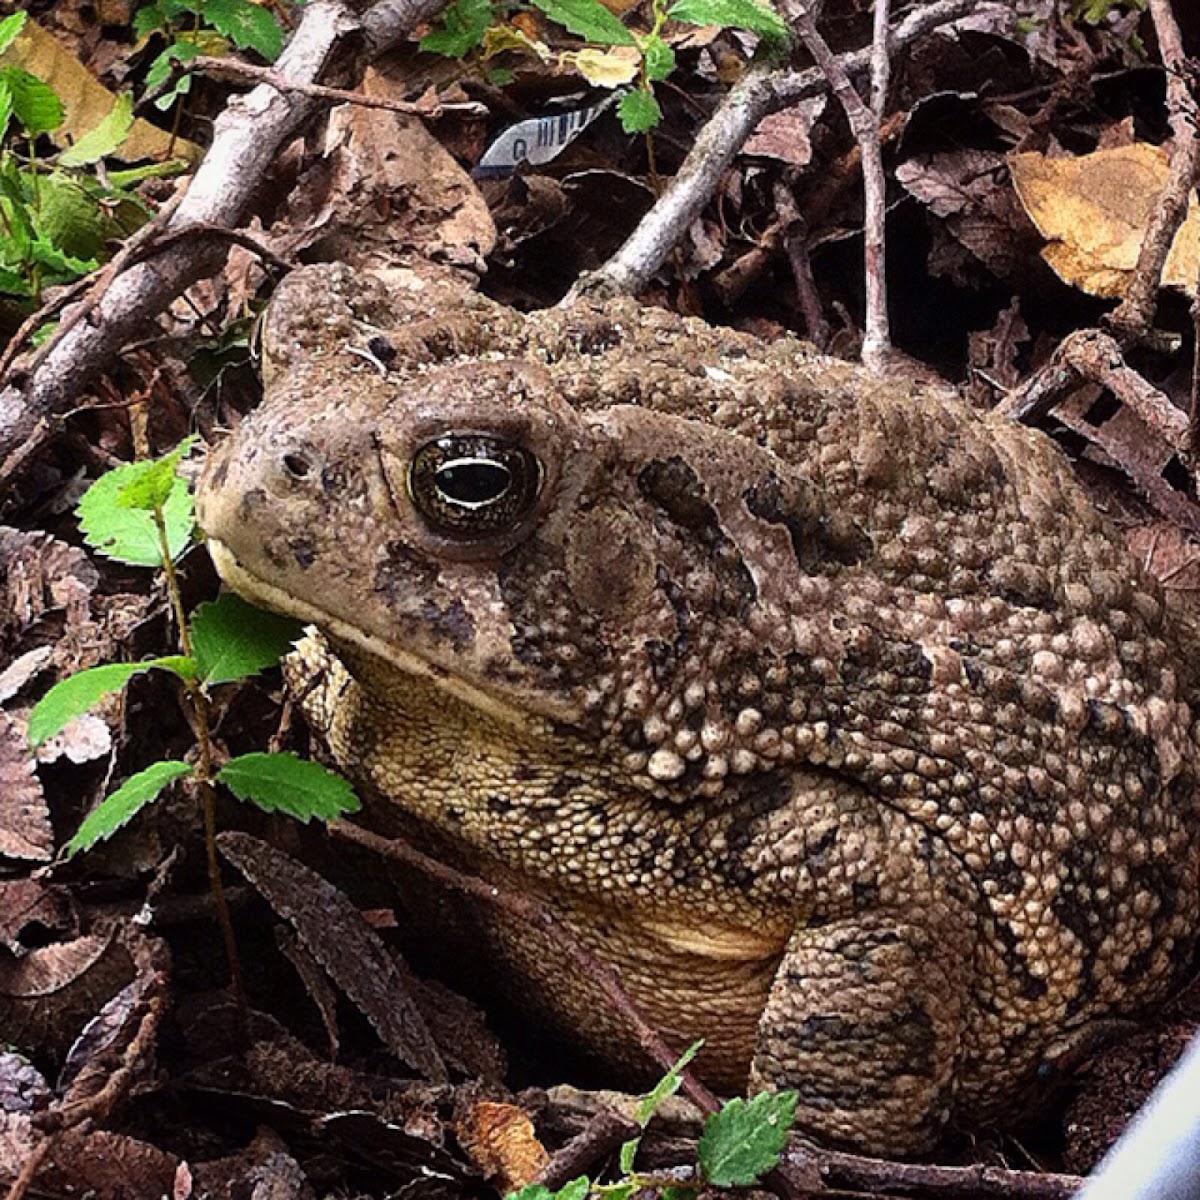 Texas Toad